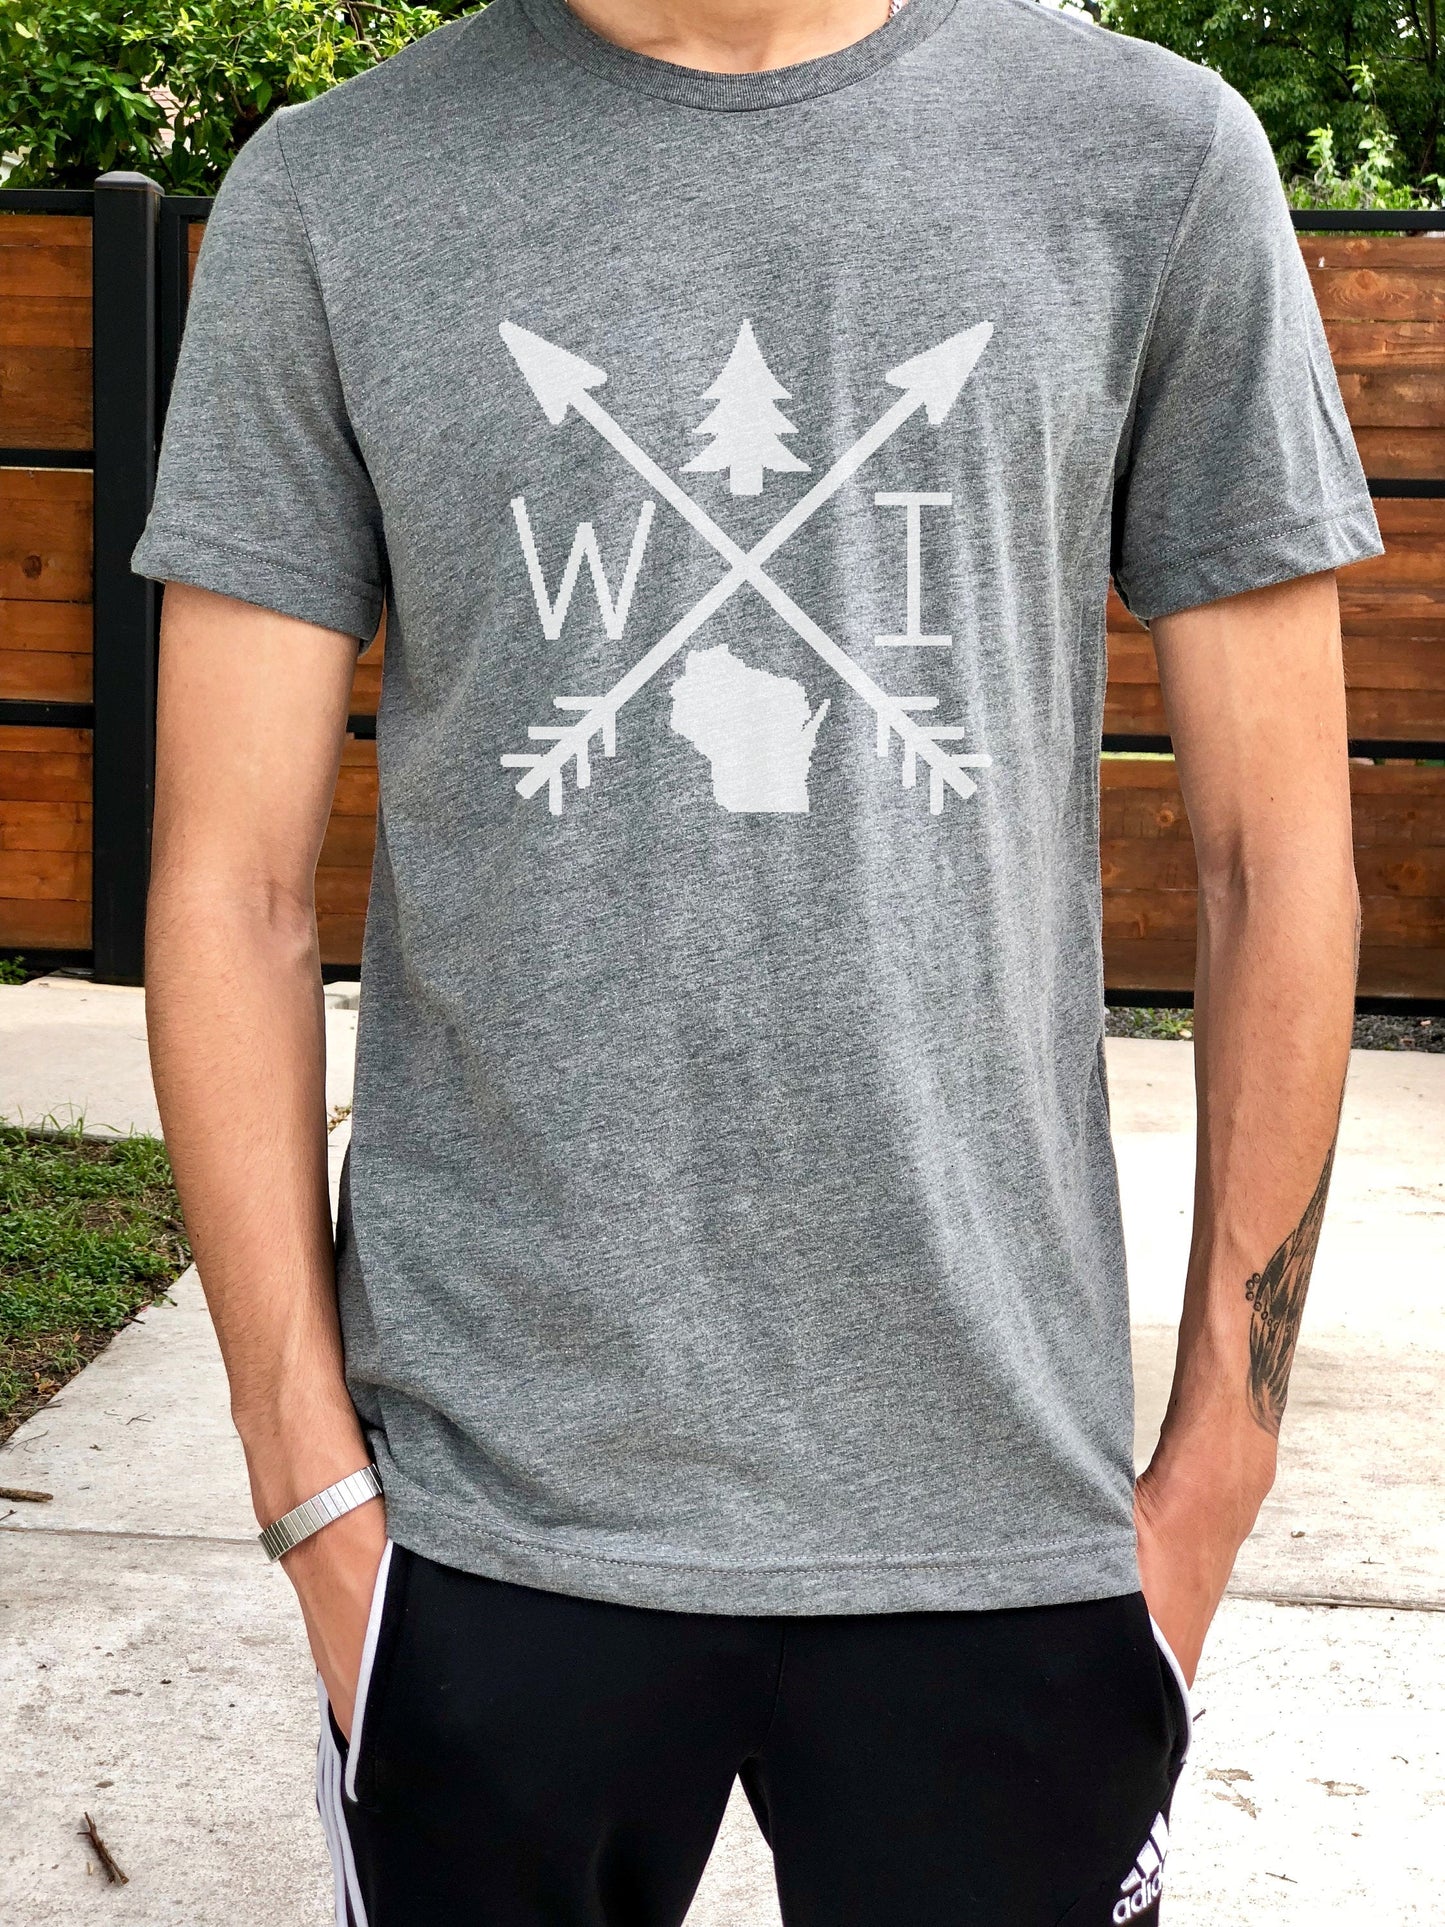 Wisconsin Arrows T-Shirt - Deep Heather Gray - ready to ship